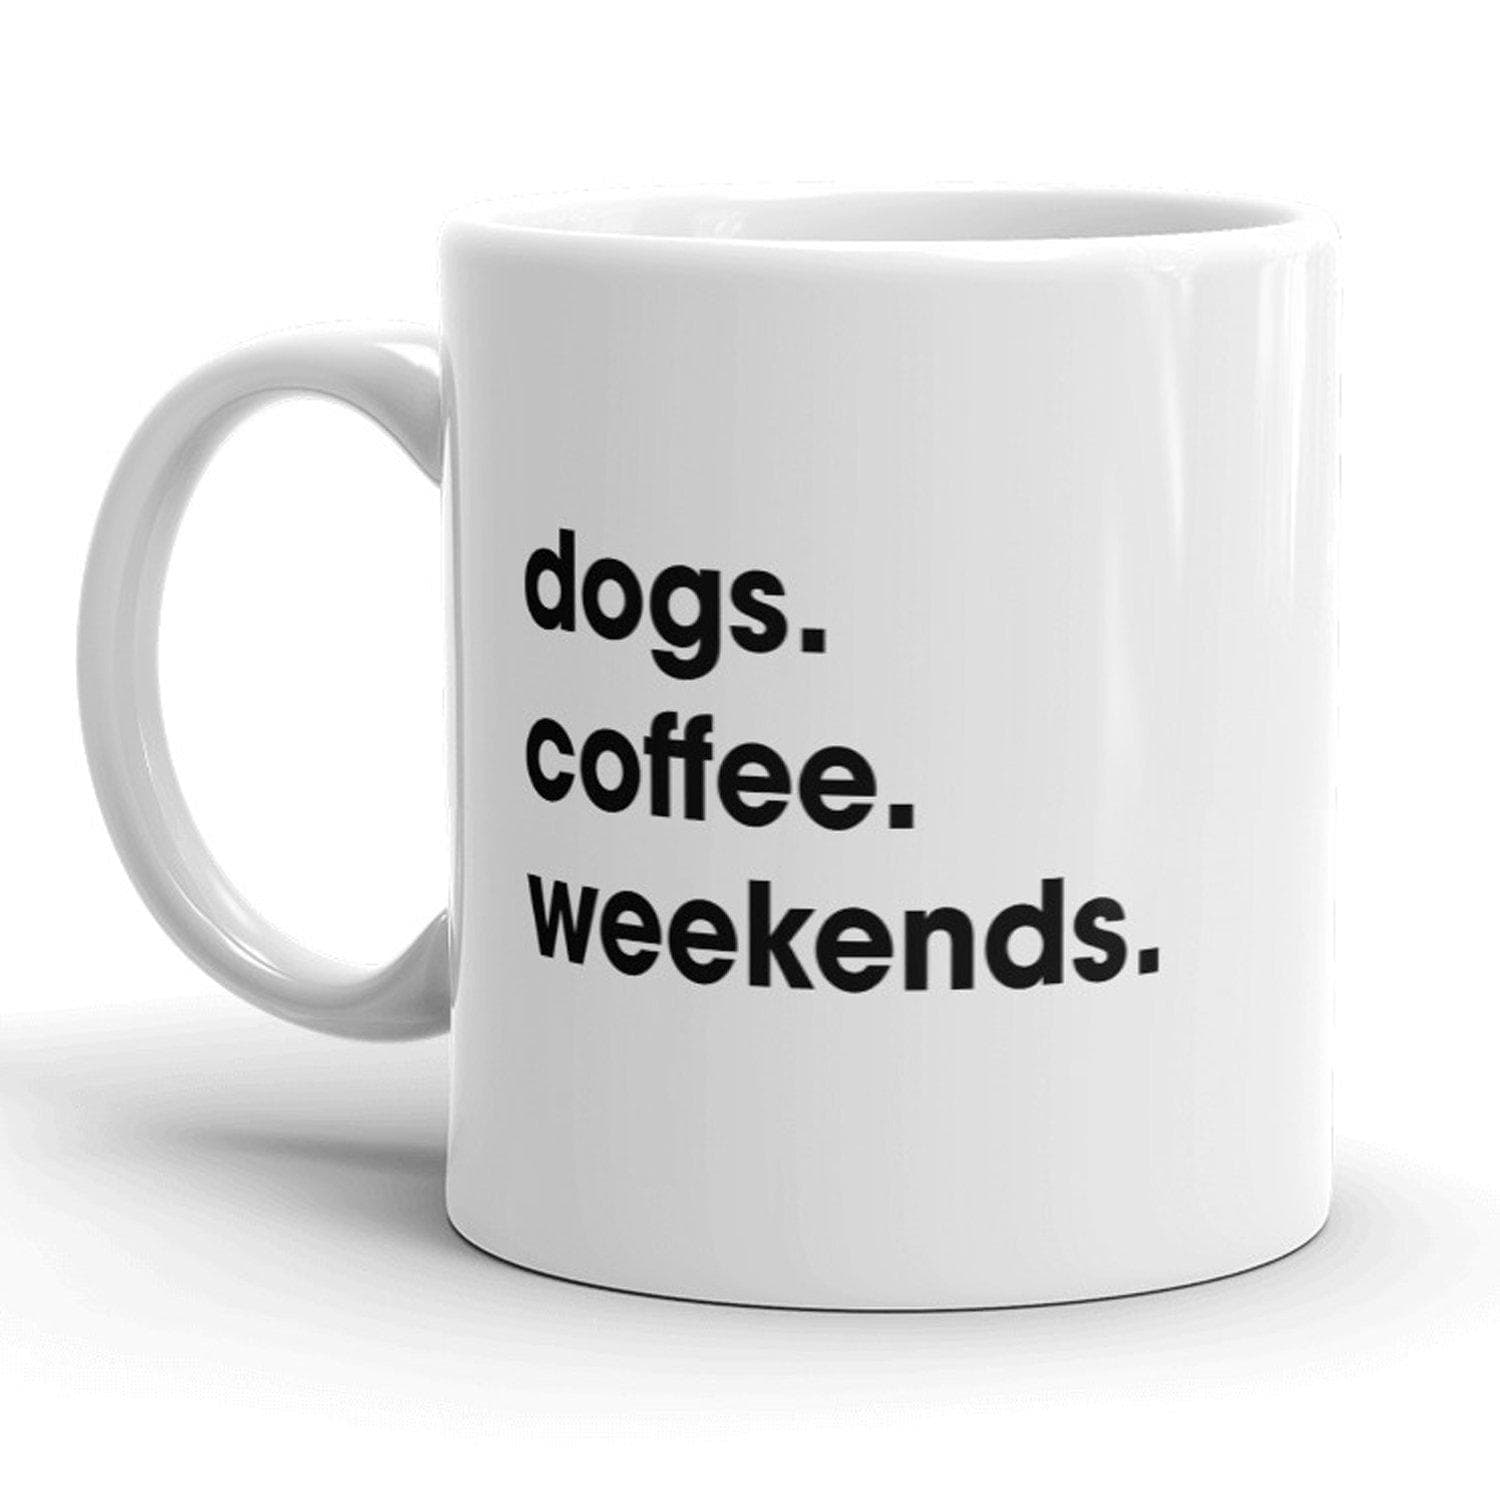 Dogs Coffee Weekends Mug - Crazy Dog T-Shirts